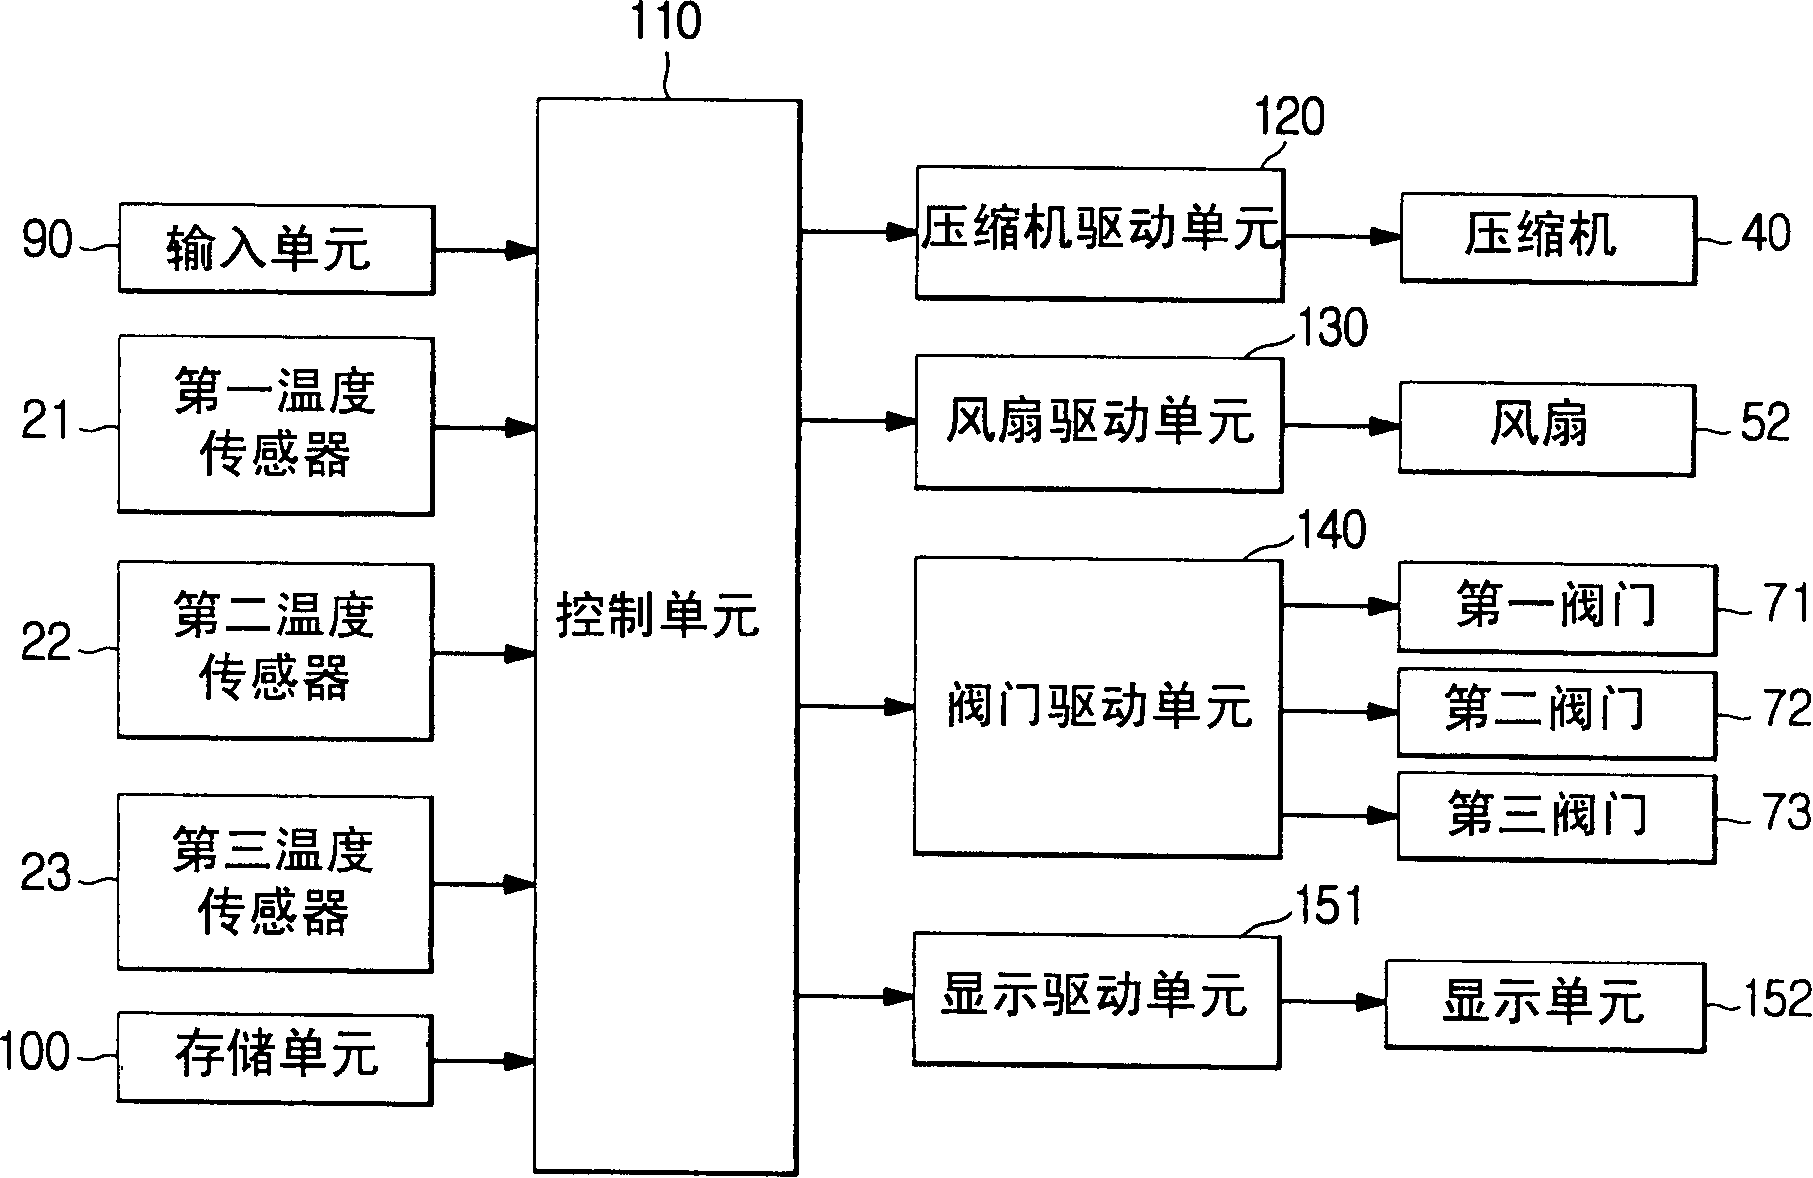 Control method of multi-chamber refrigerator